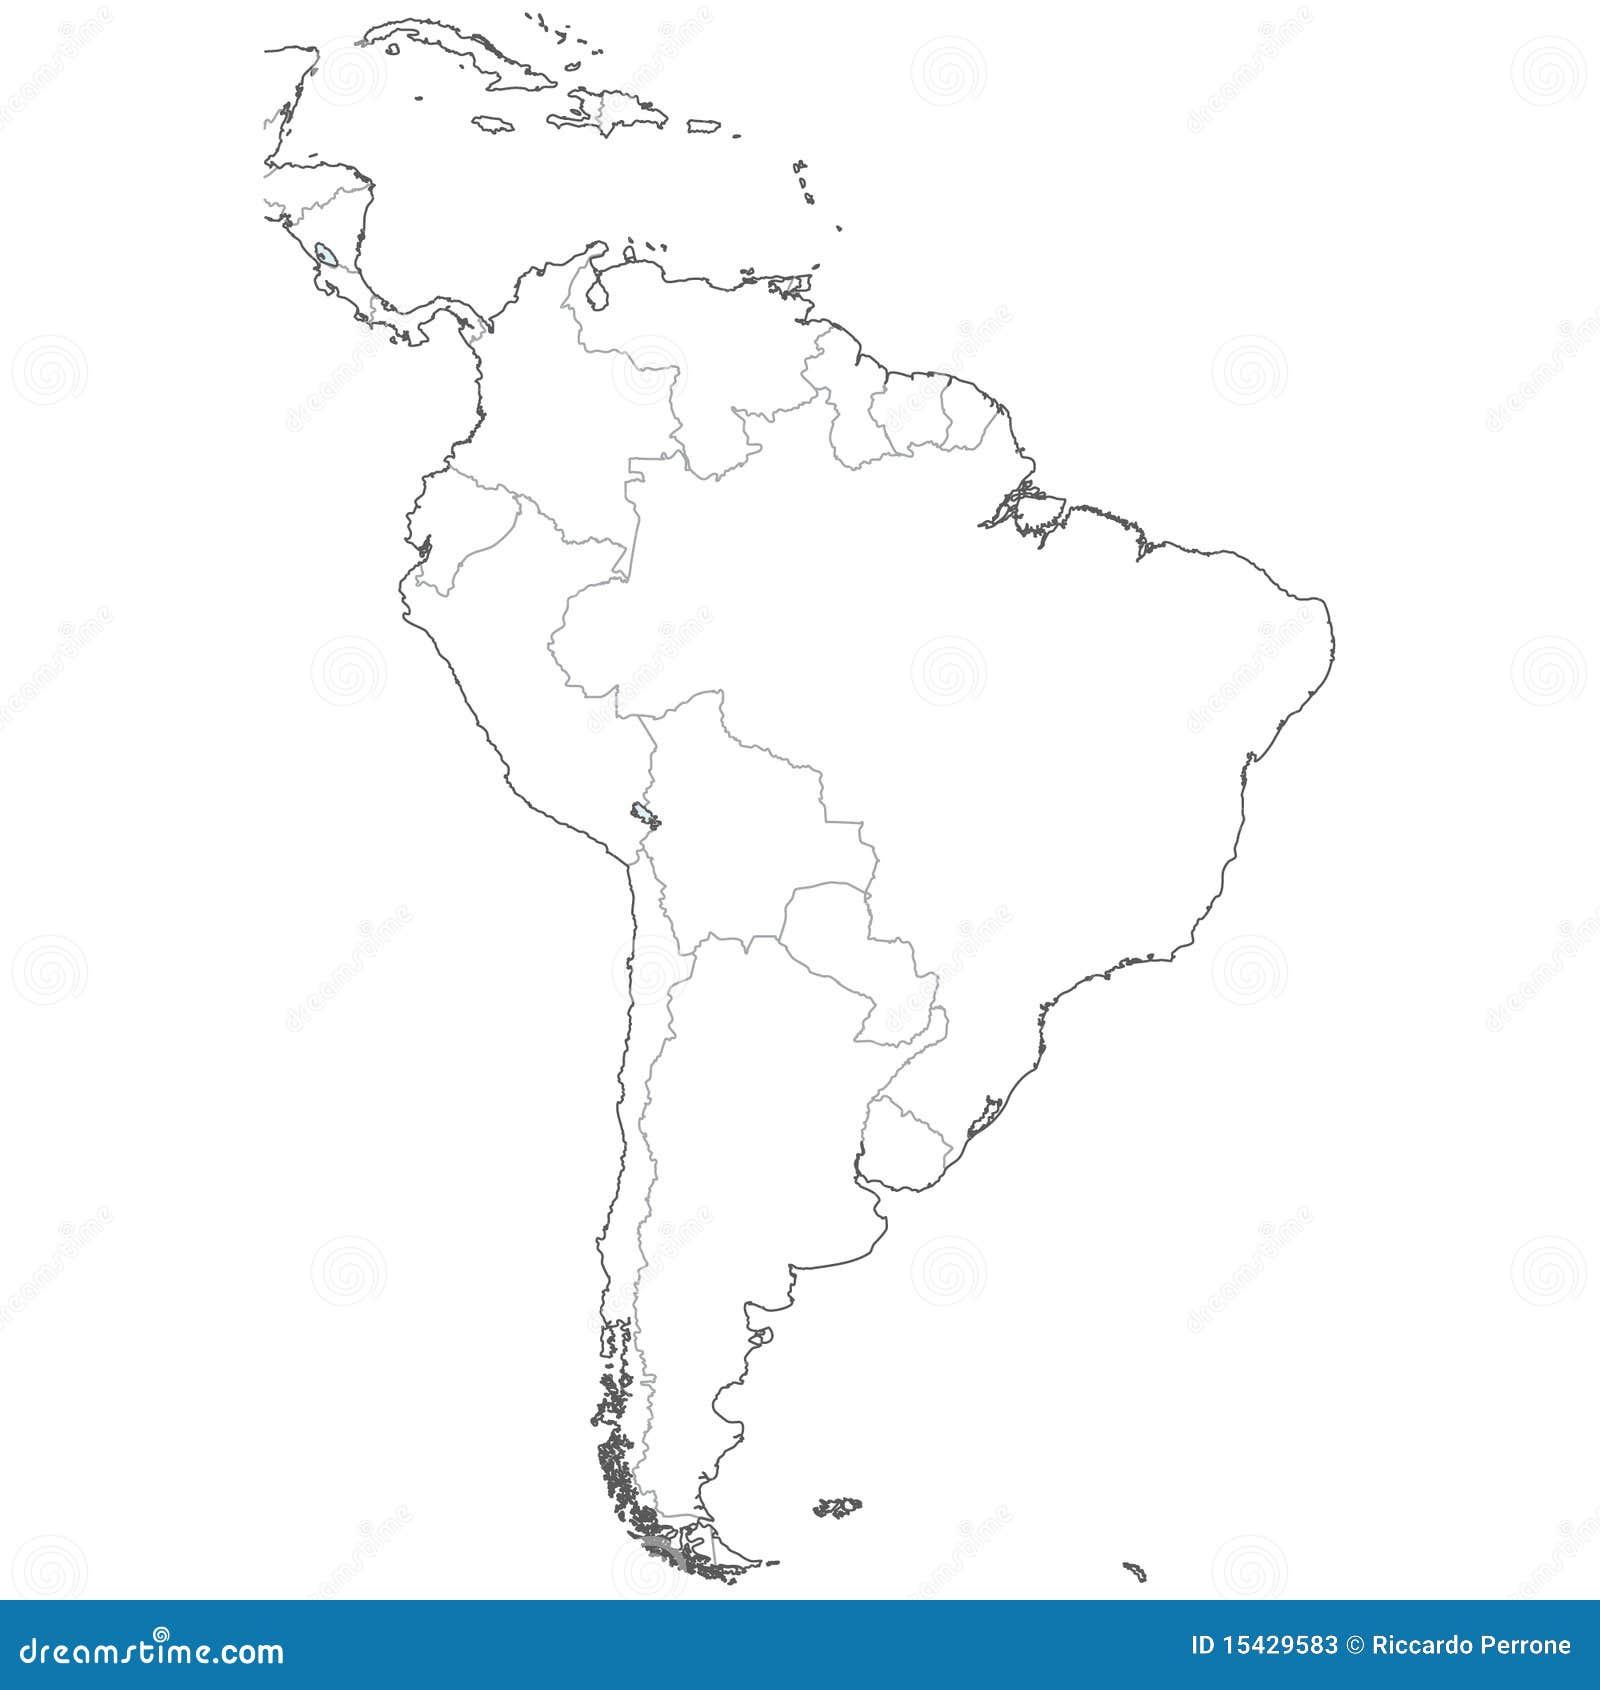 South America map stock illustration. Illustration of jungle - 15429583